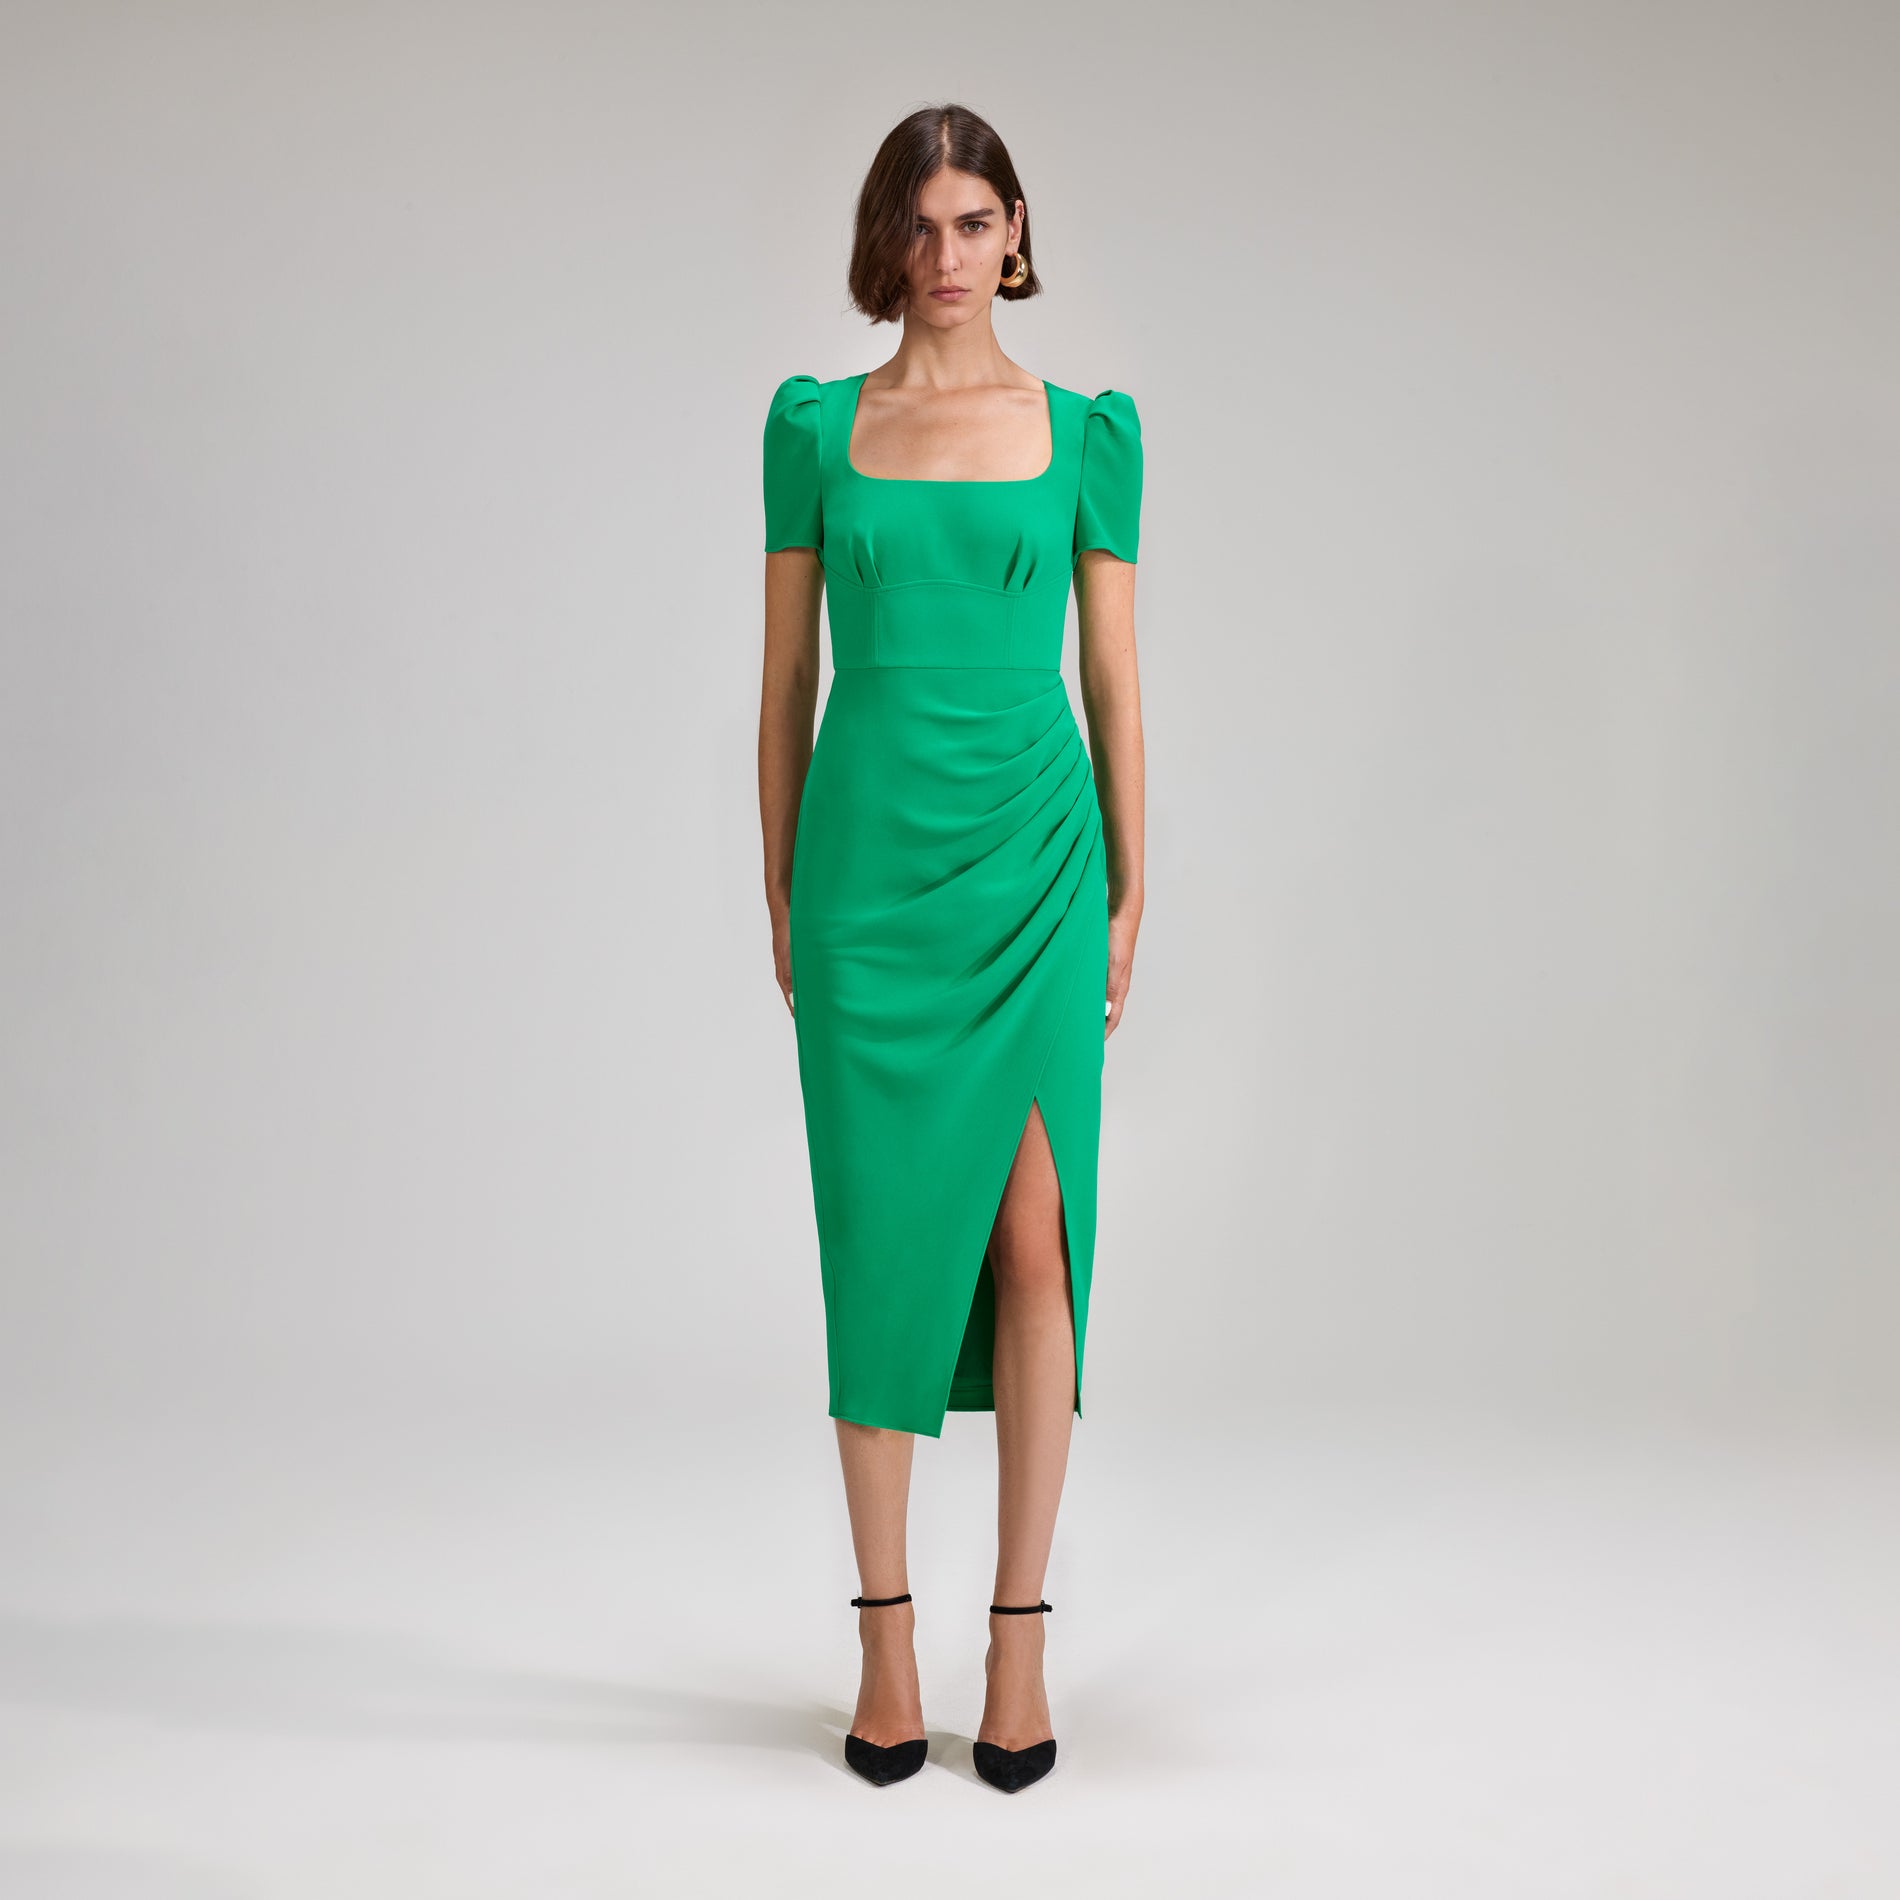 A woman wearing the Green Crepe Midi Dress